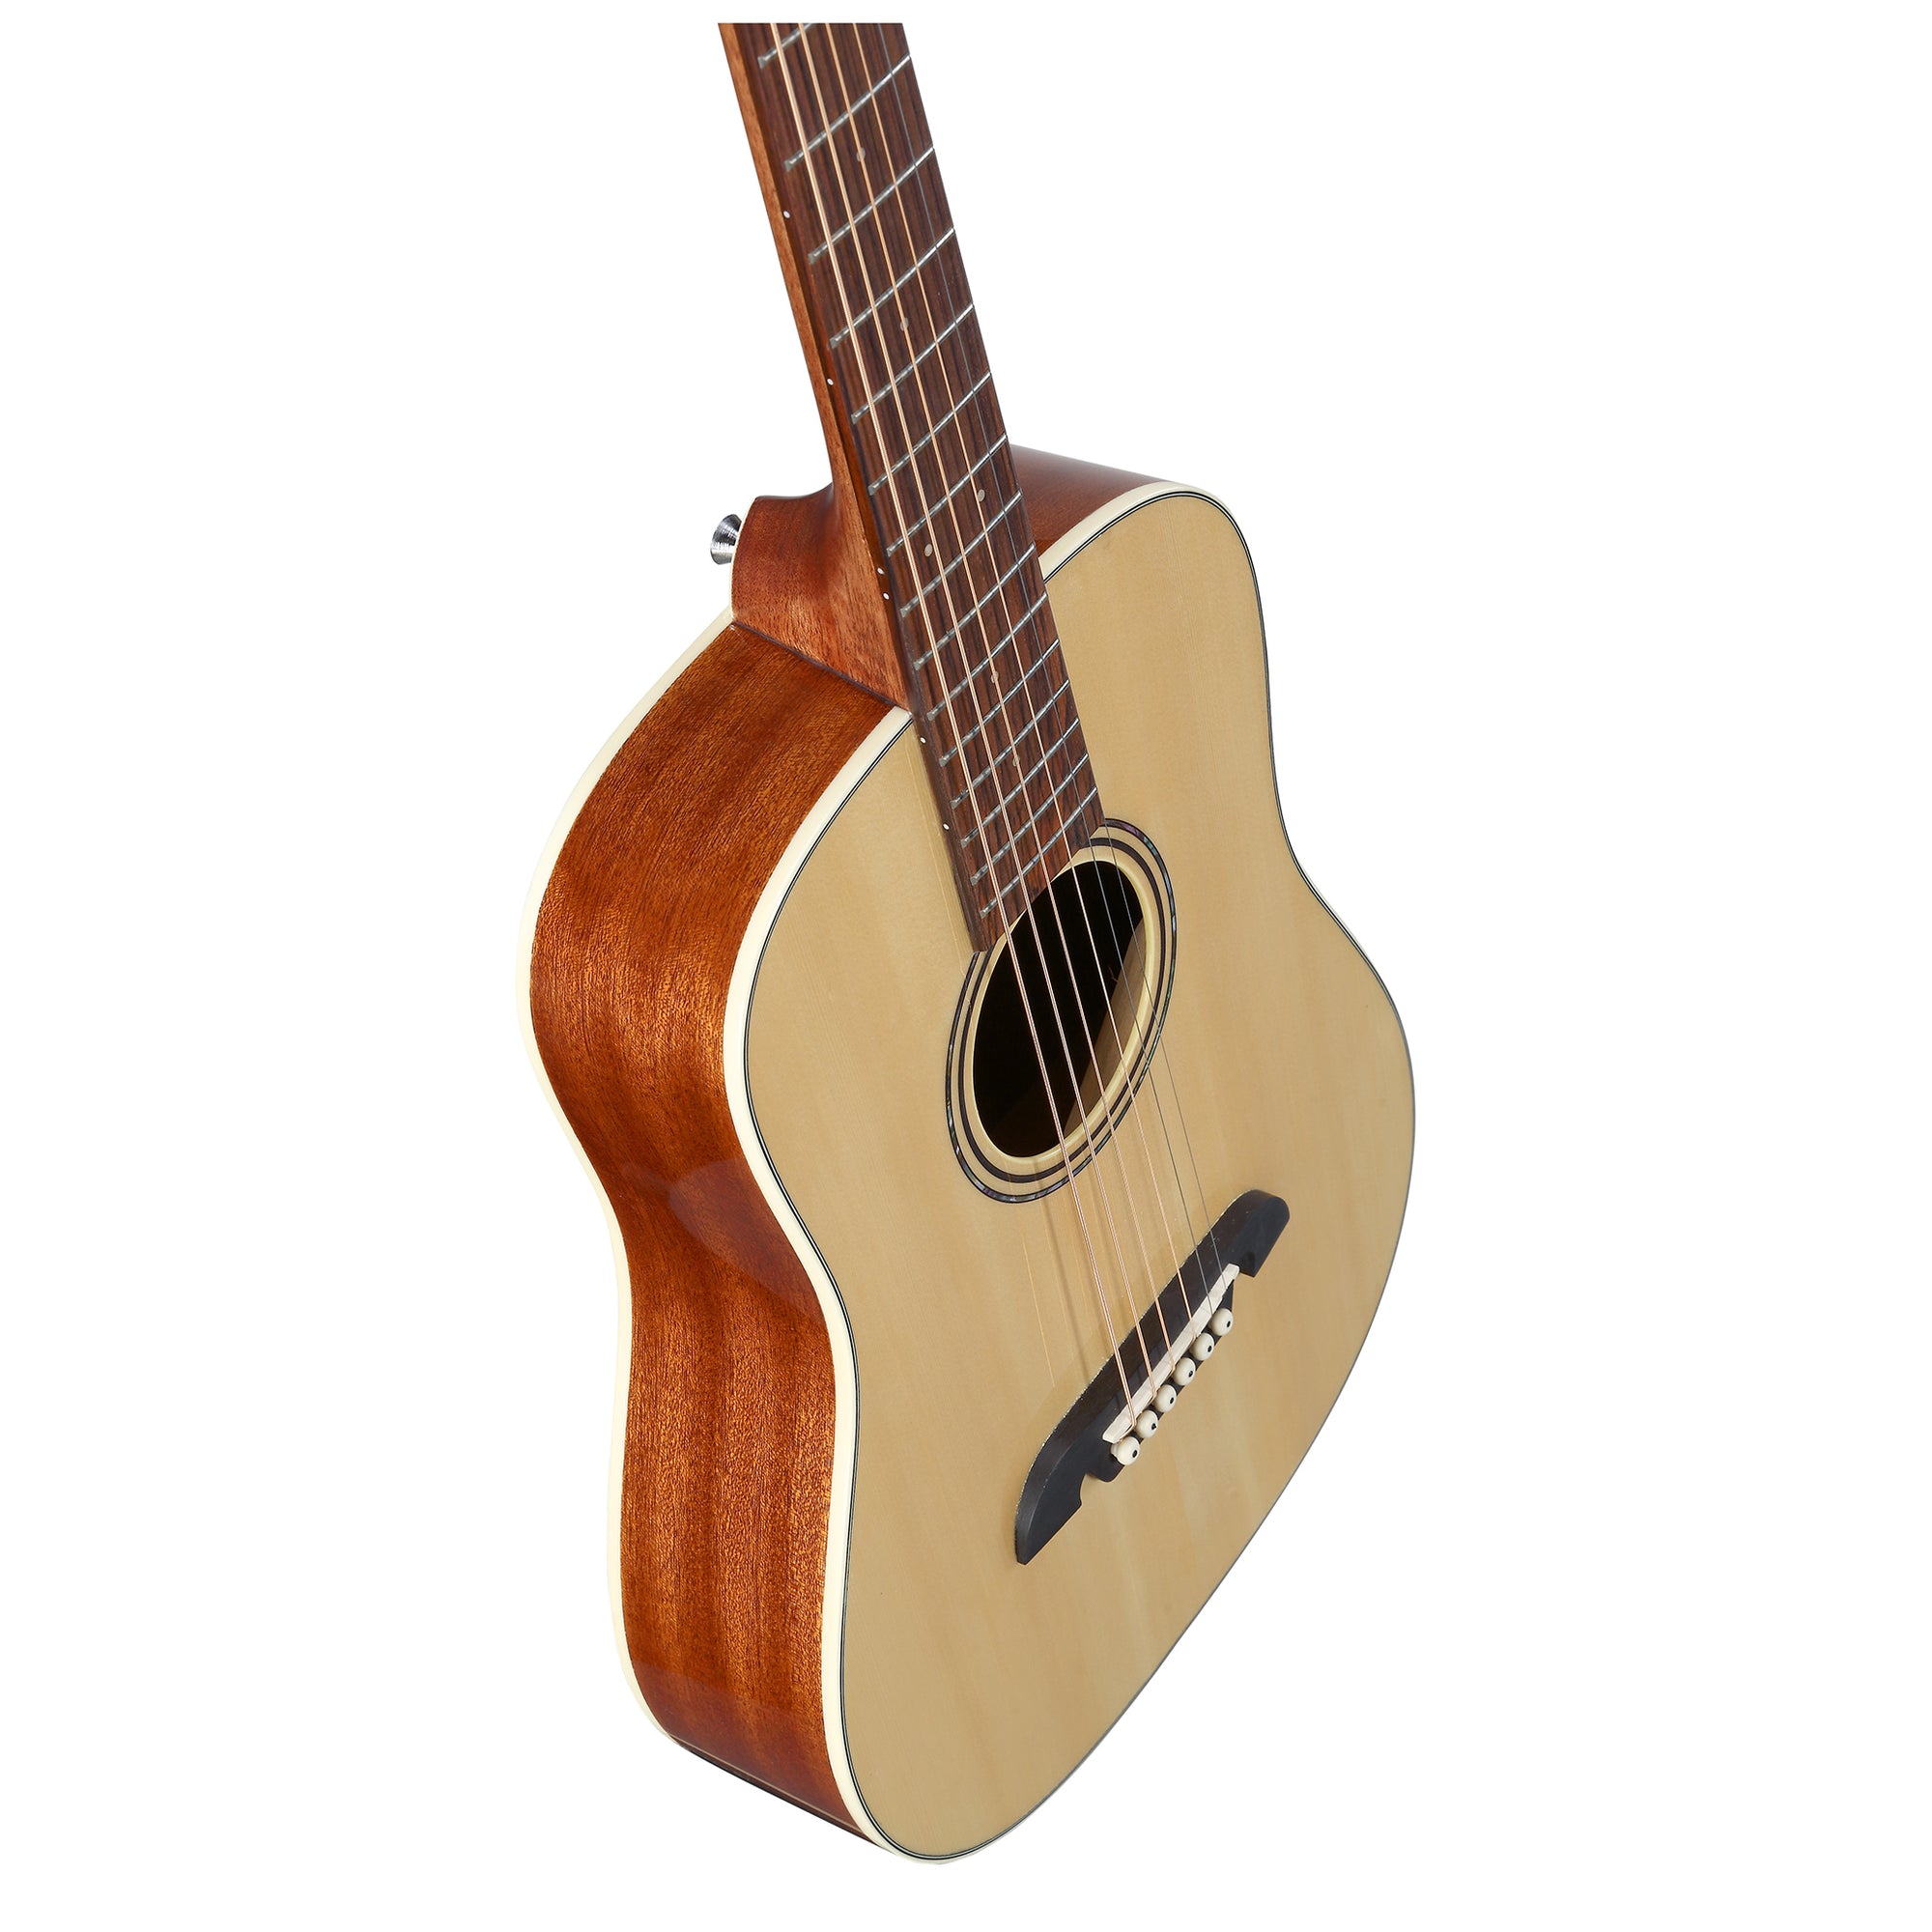 Alvarez RT26 Travel-size Acoustic Guitar with Gigbag